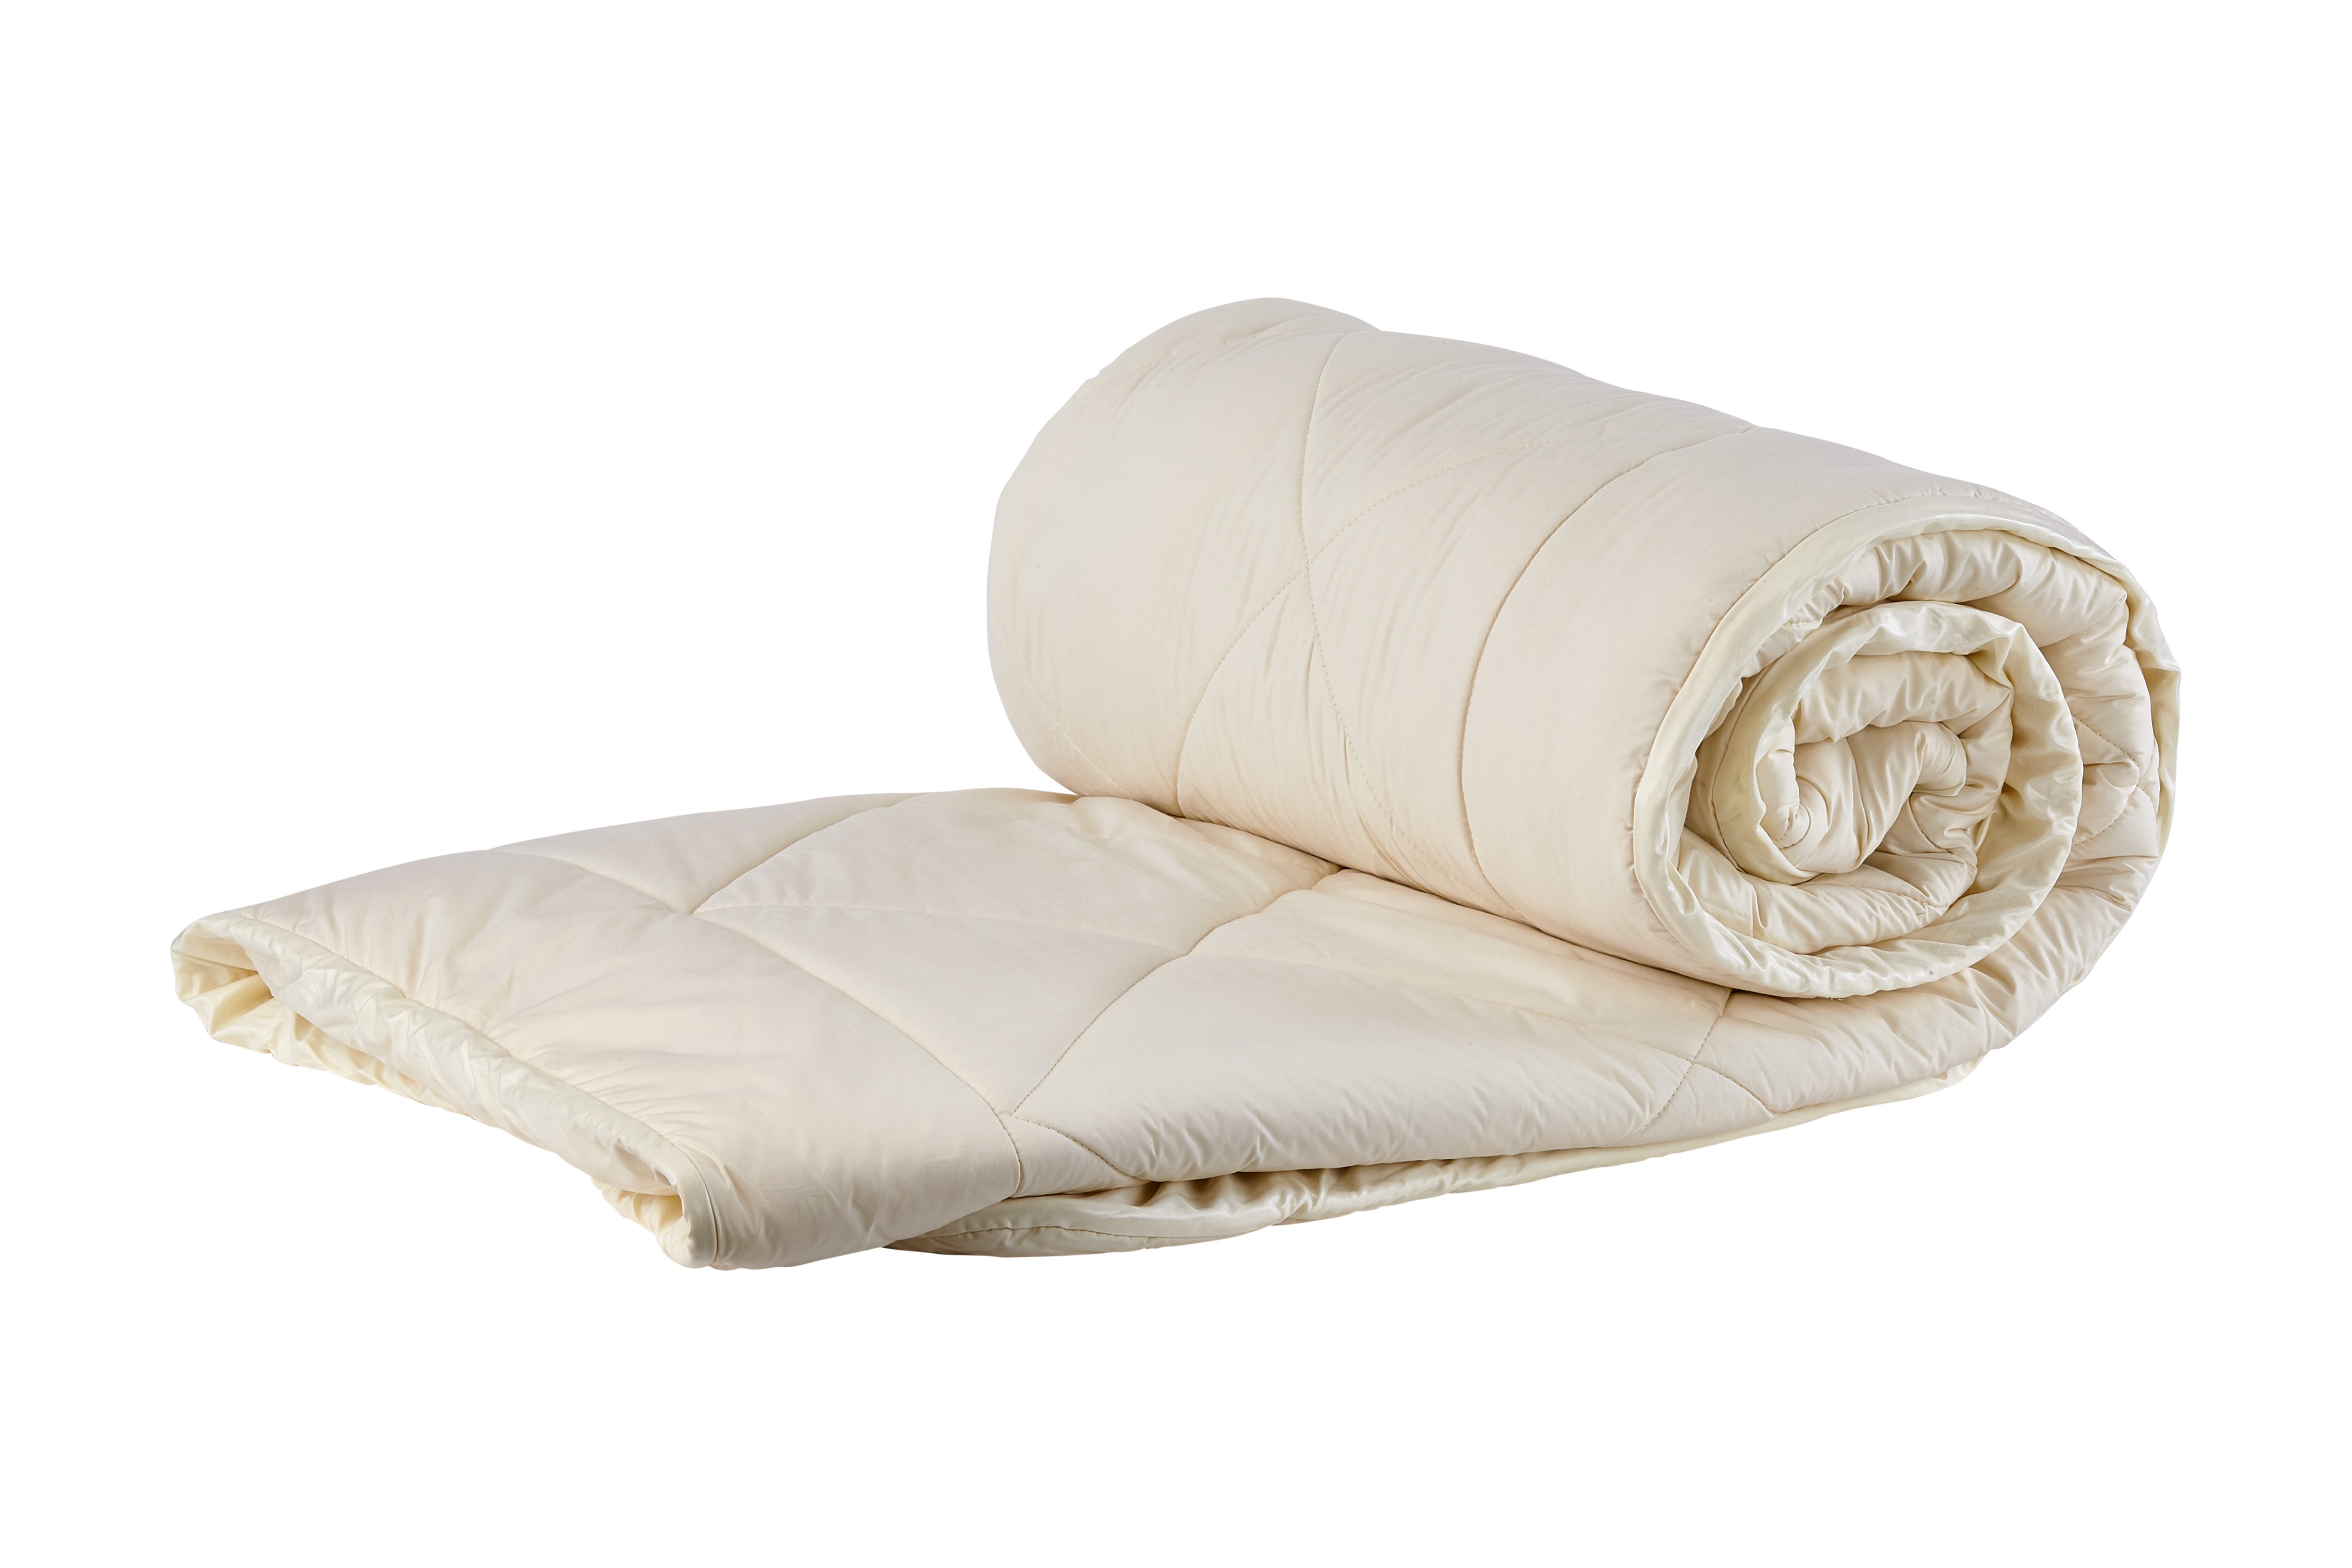 wool mattress pad for tempurpedic